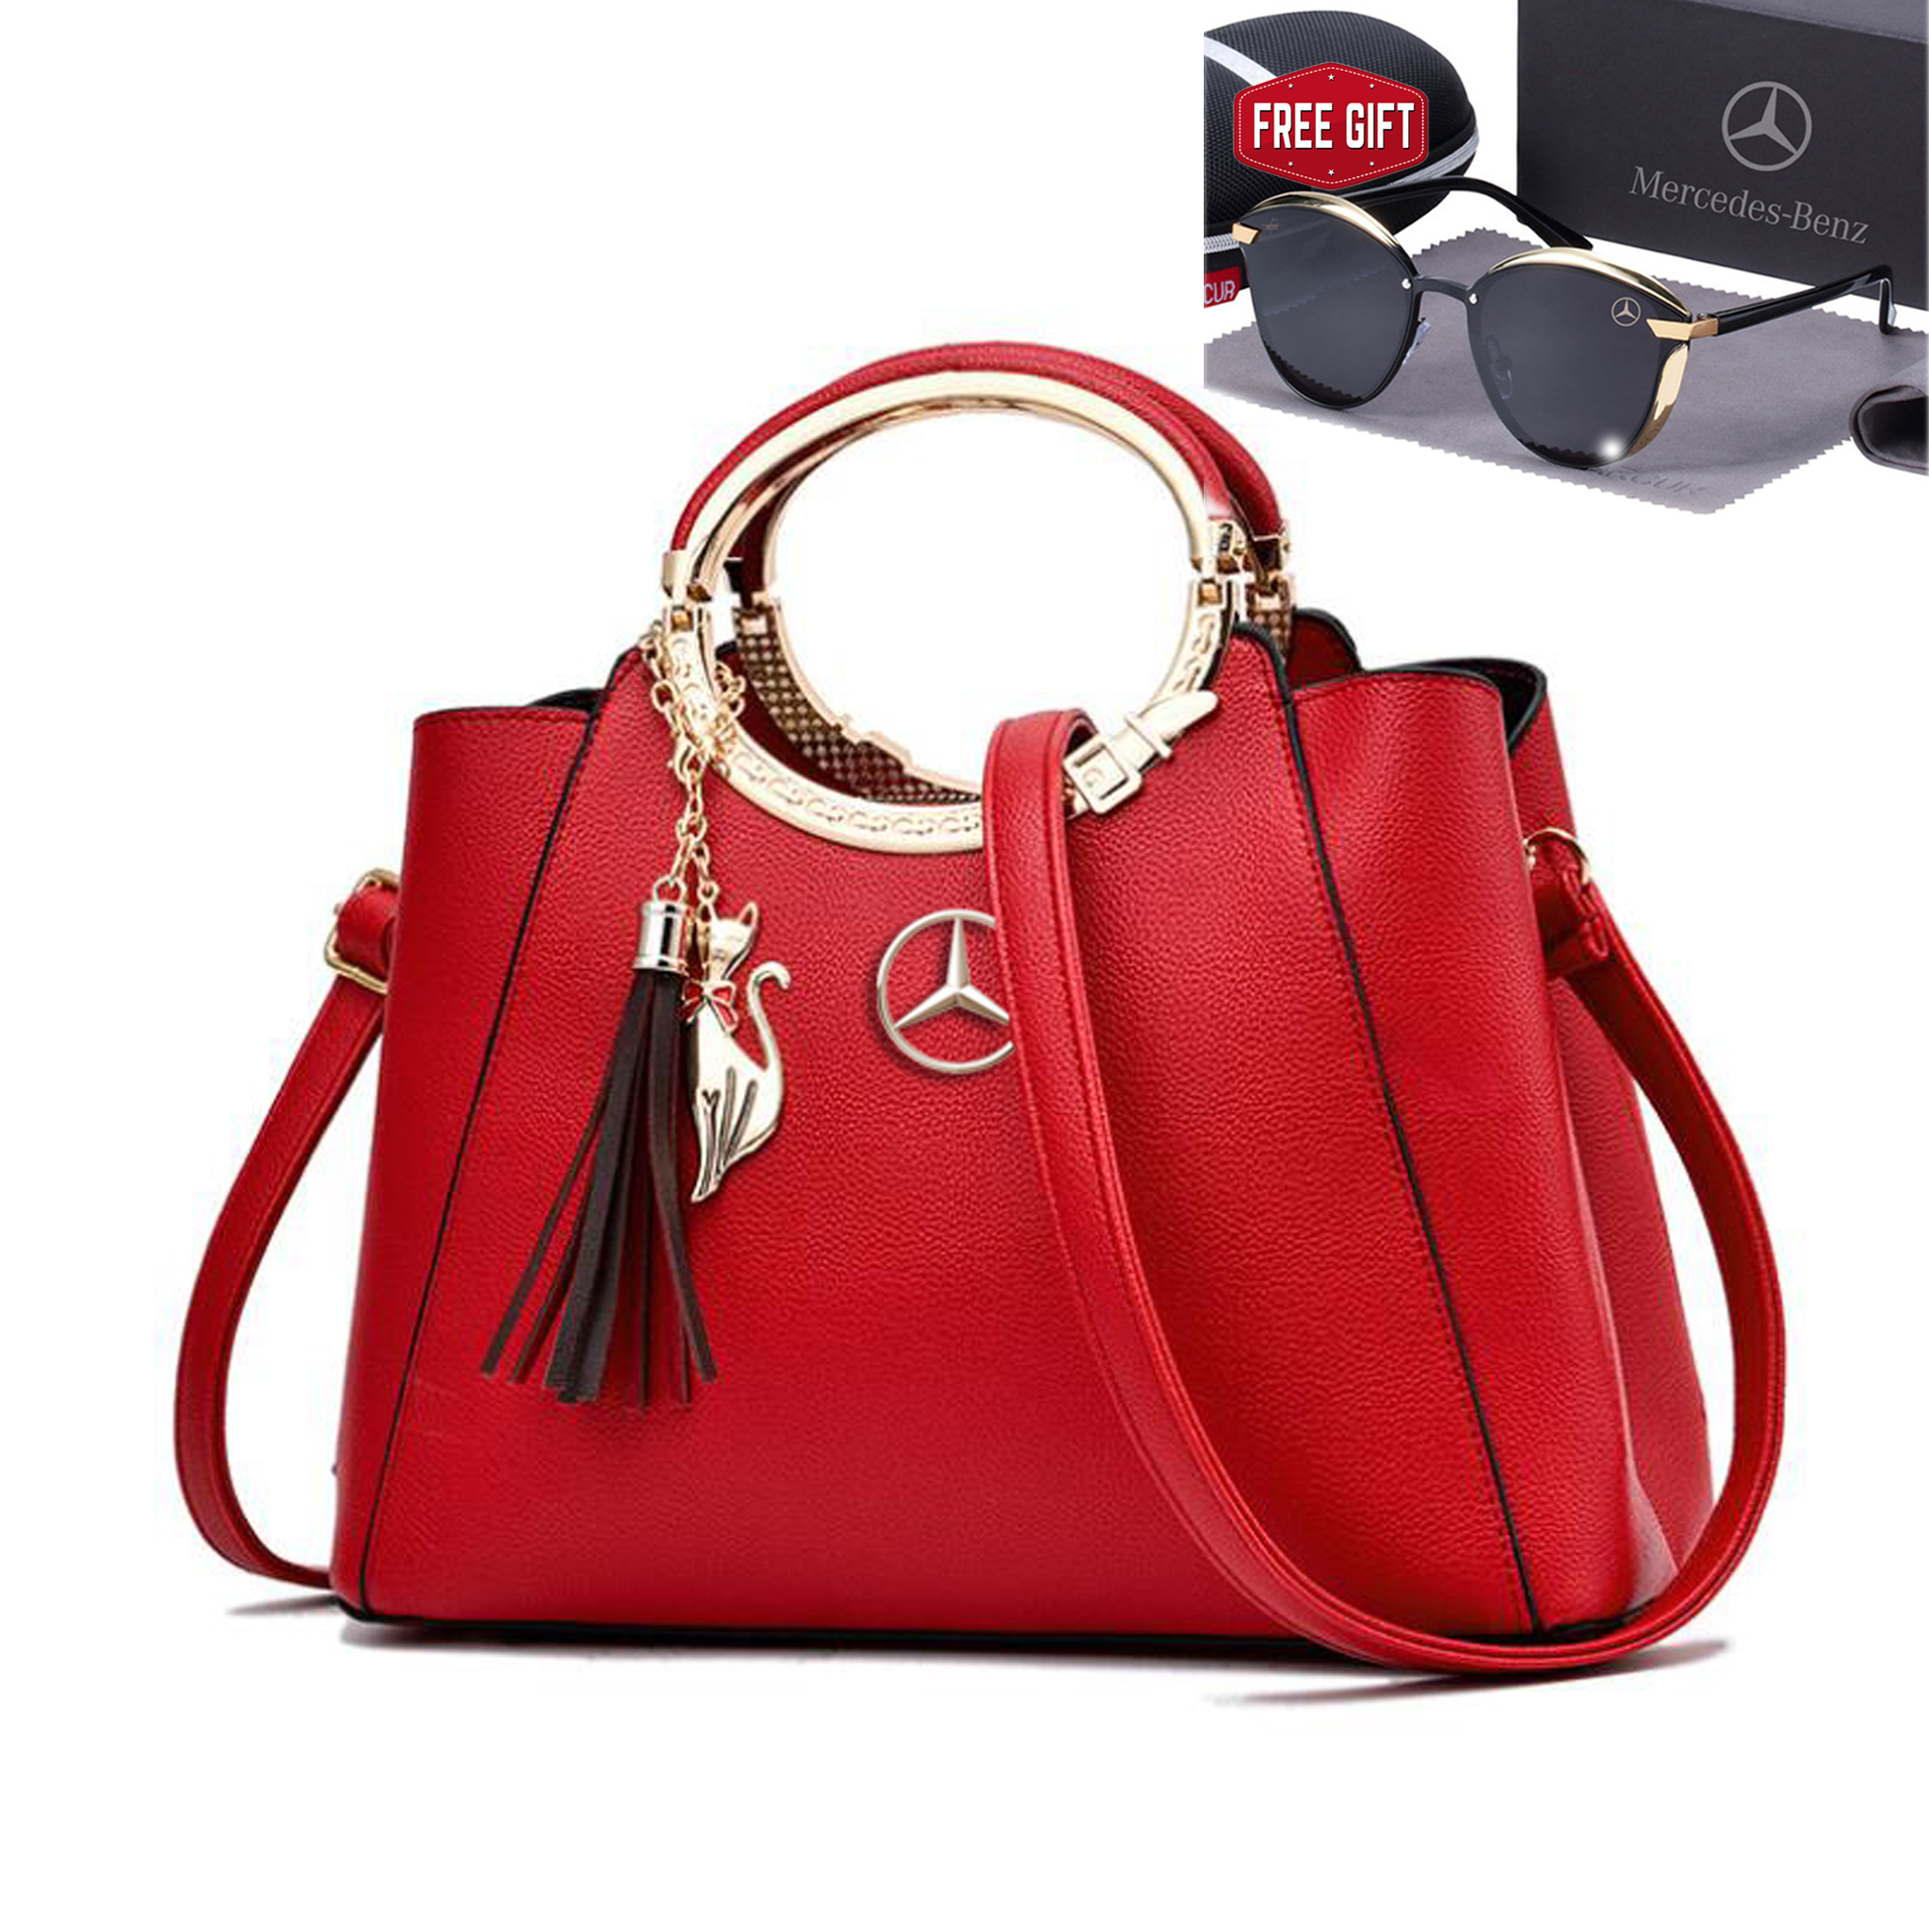 Mercedes Benz 2021 Leather Women's Bags - Tana Elegant